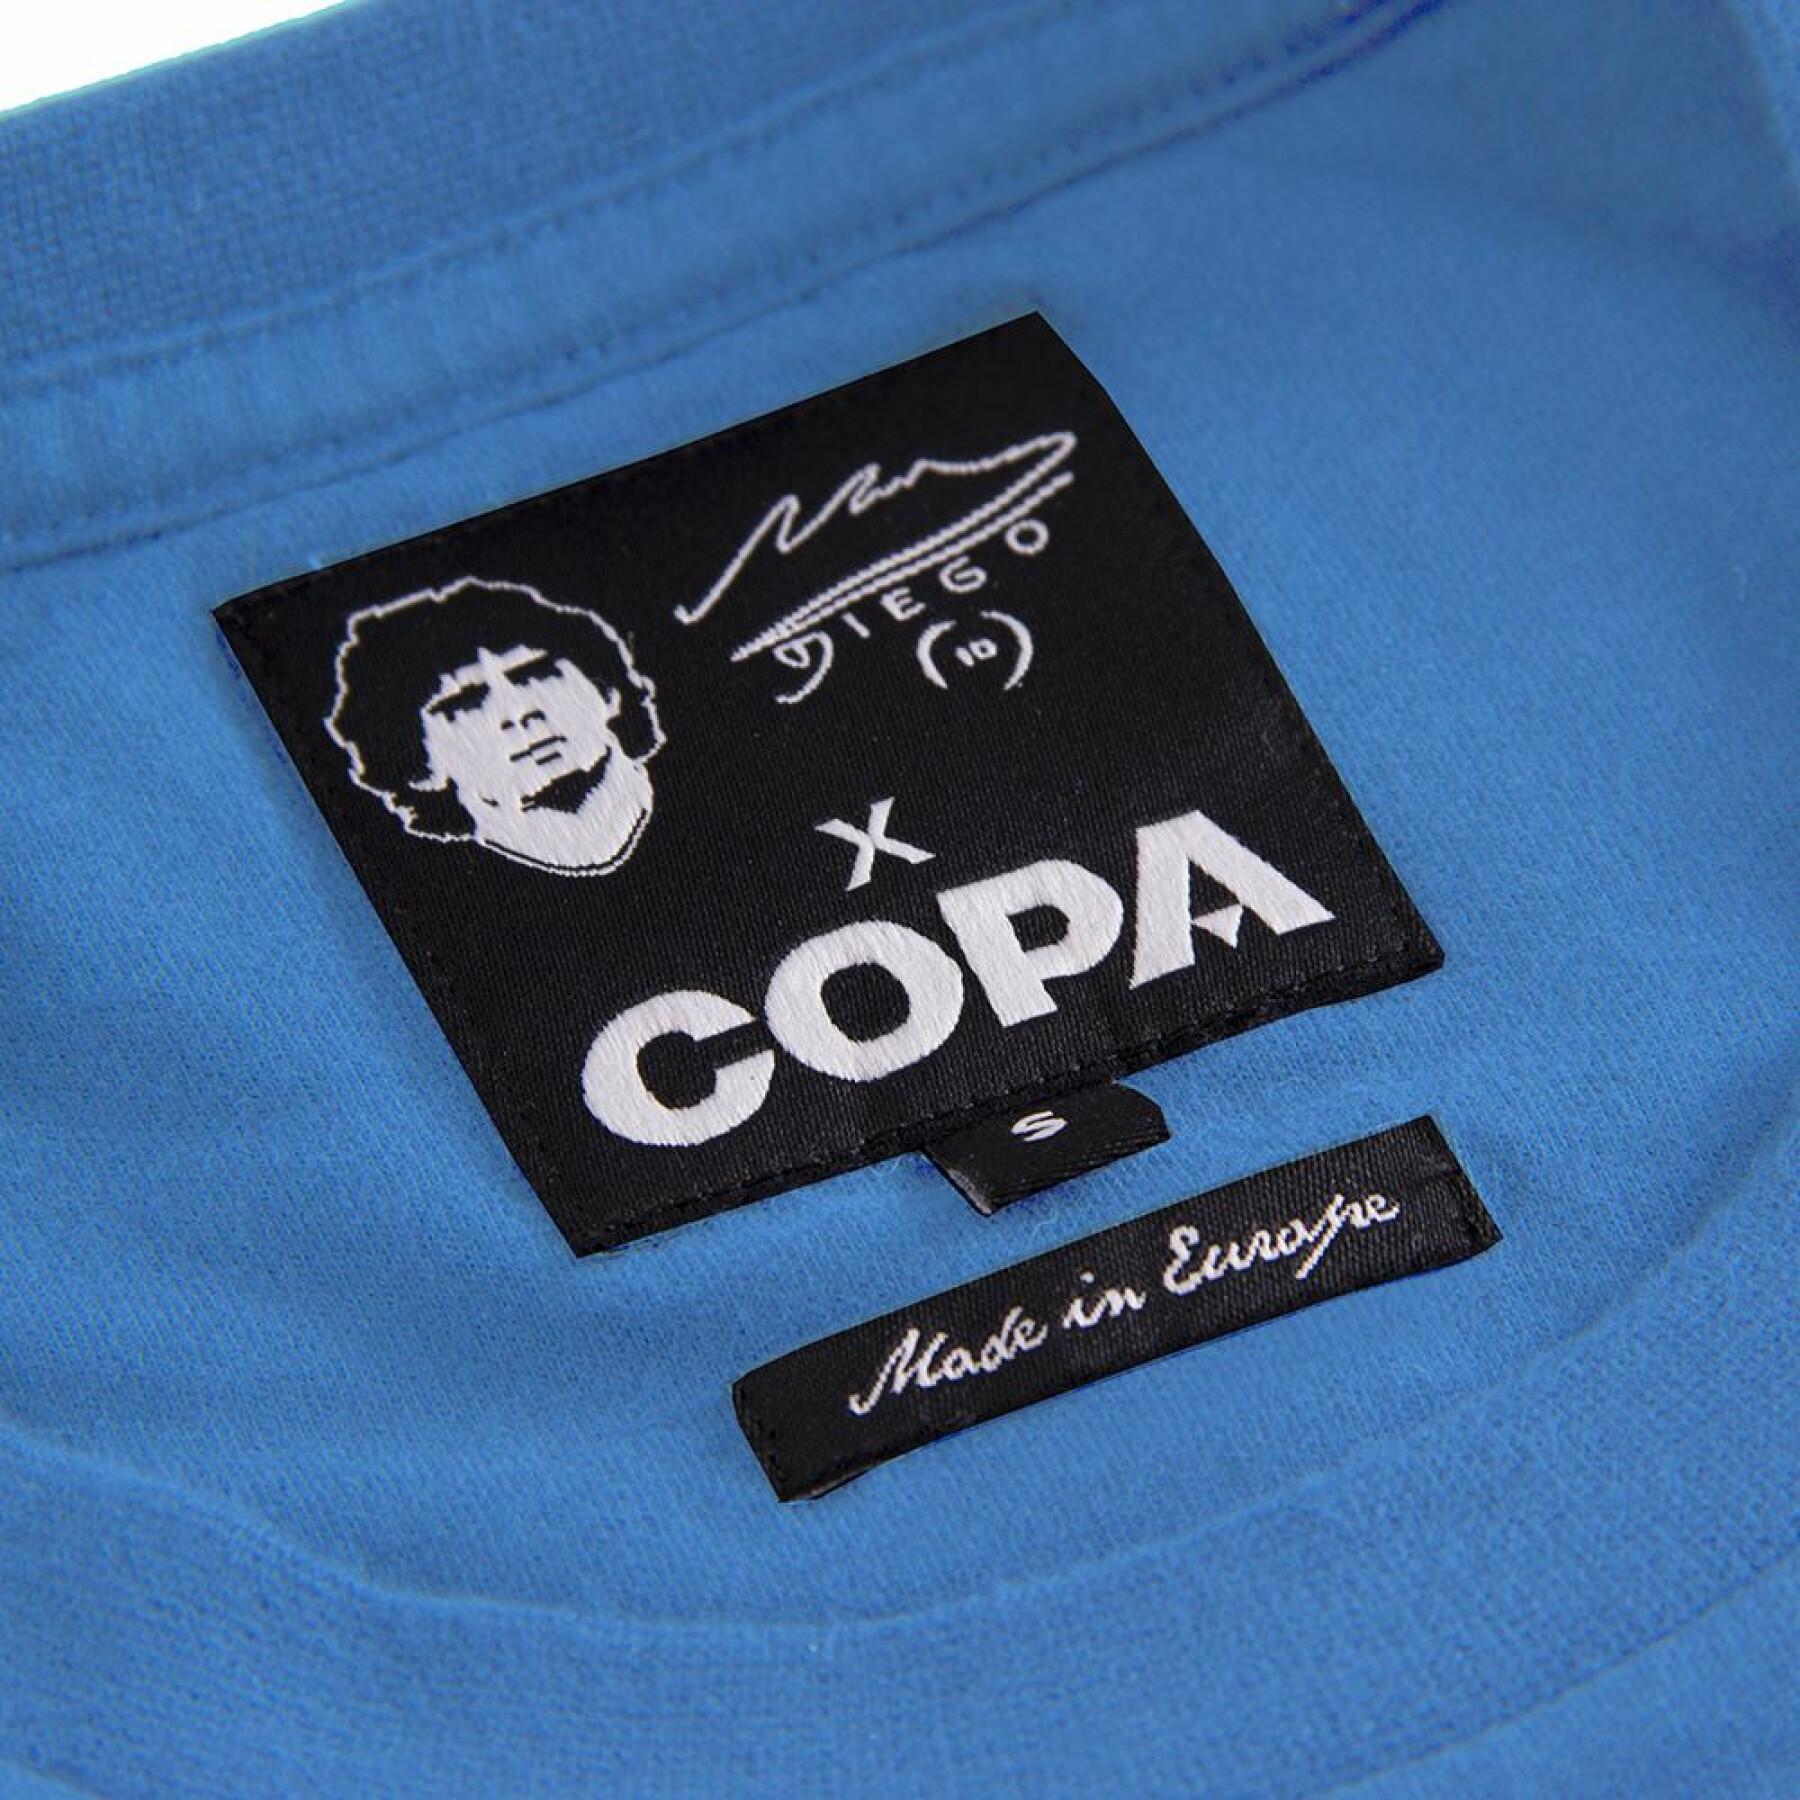 Outdoor T-shirt Copa SSC Napoli Maradona